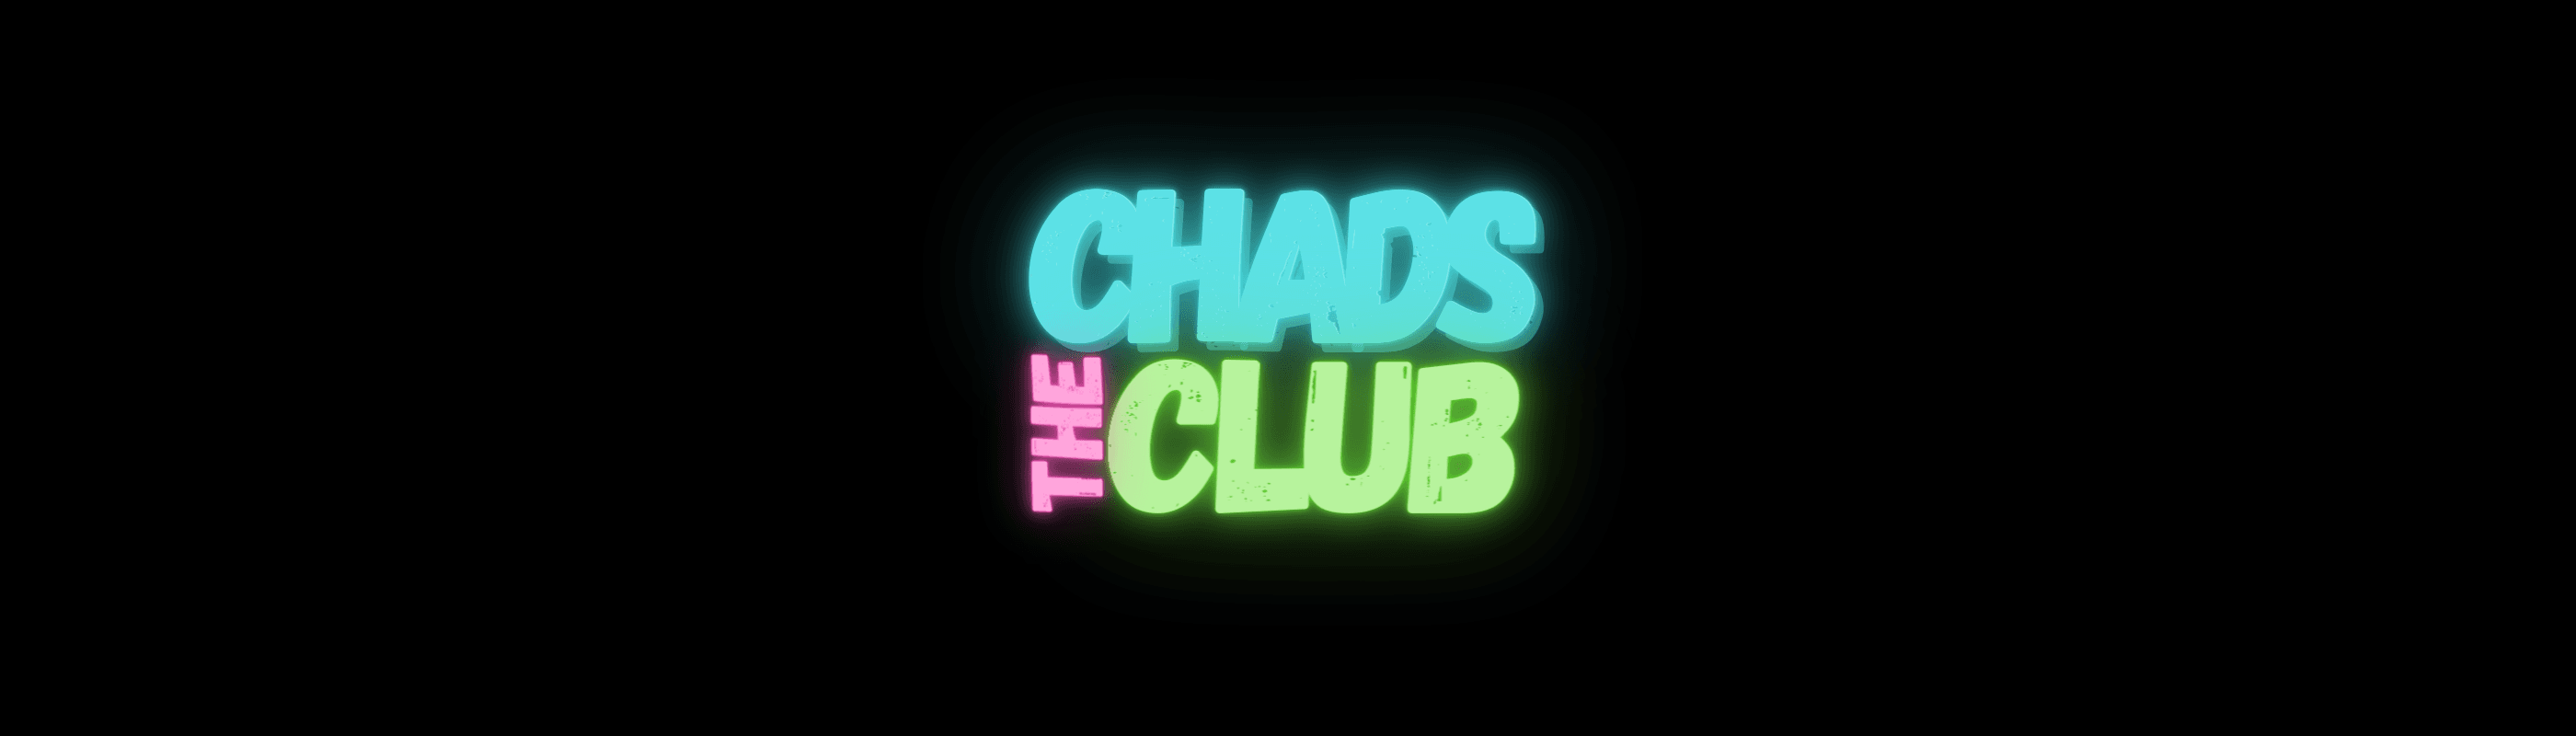 TheChadsClub バナー